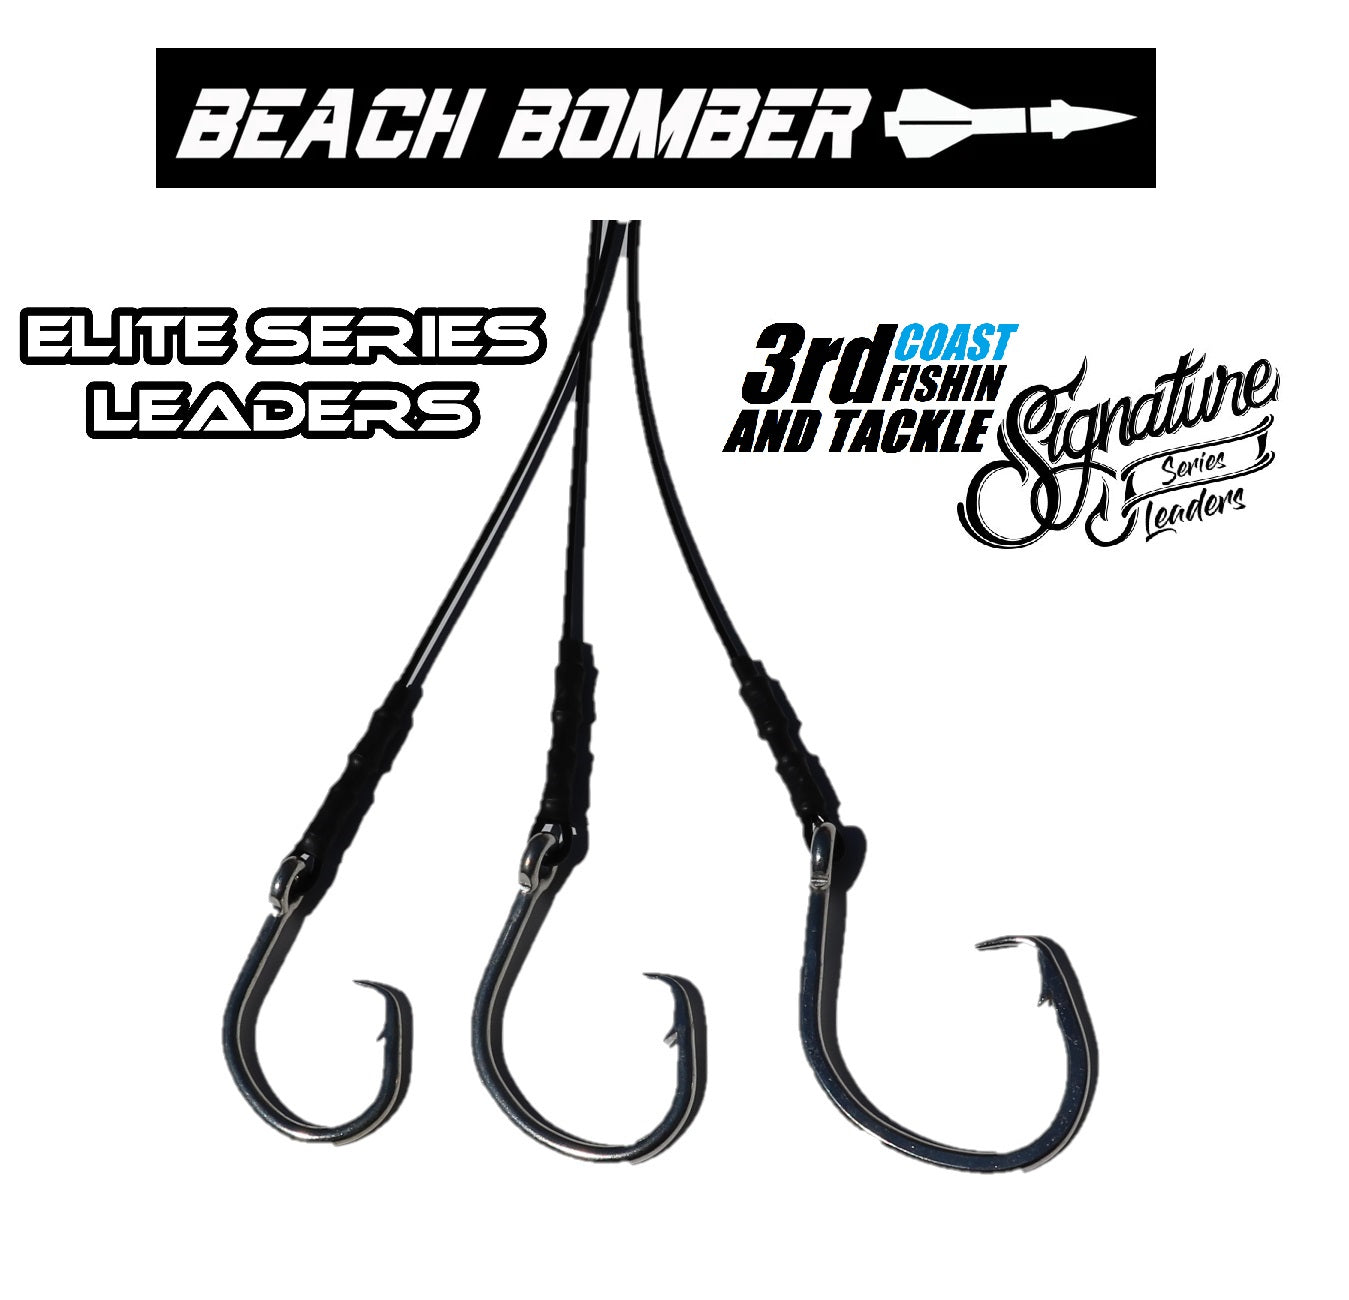 6' Beach Bomber Elite Series Leaders – 3rd Coast Fishin and Tackle